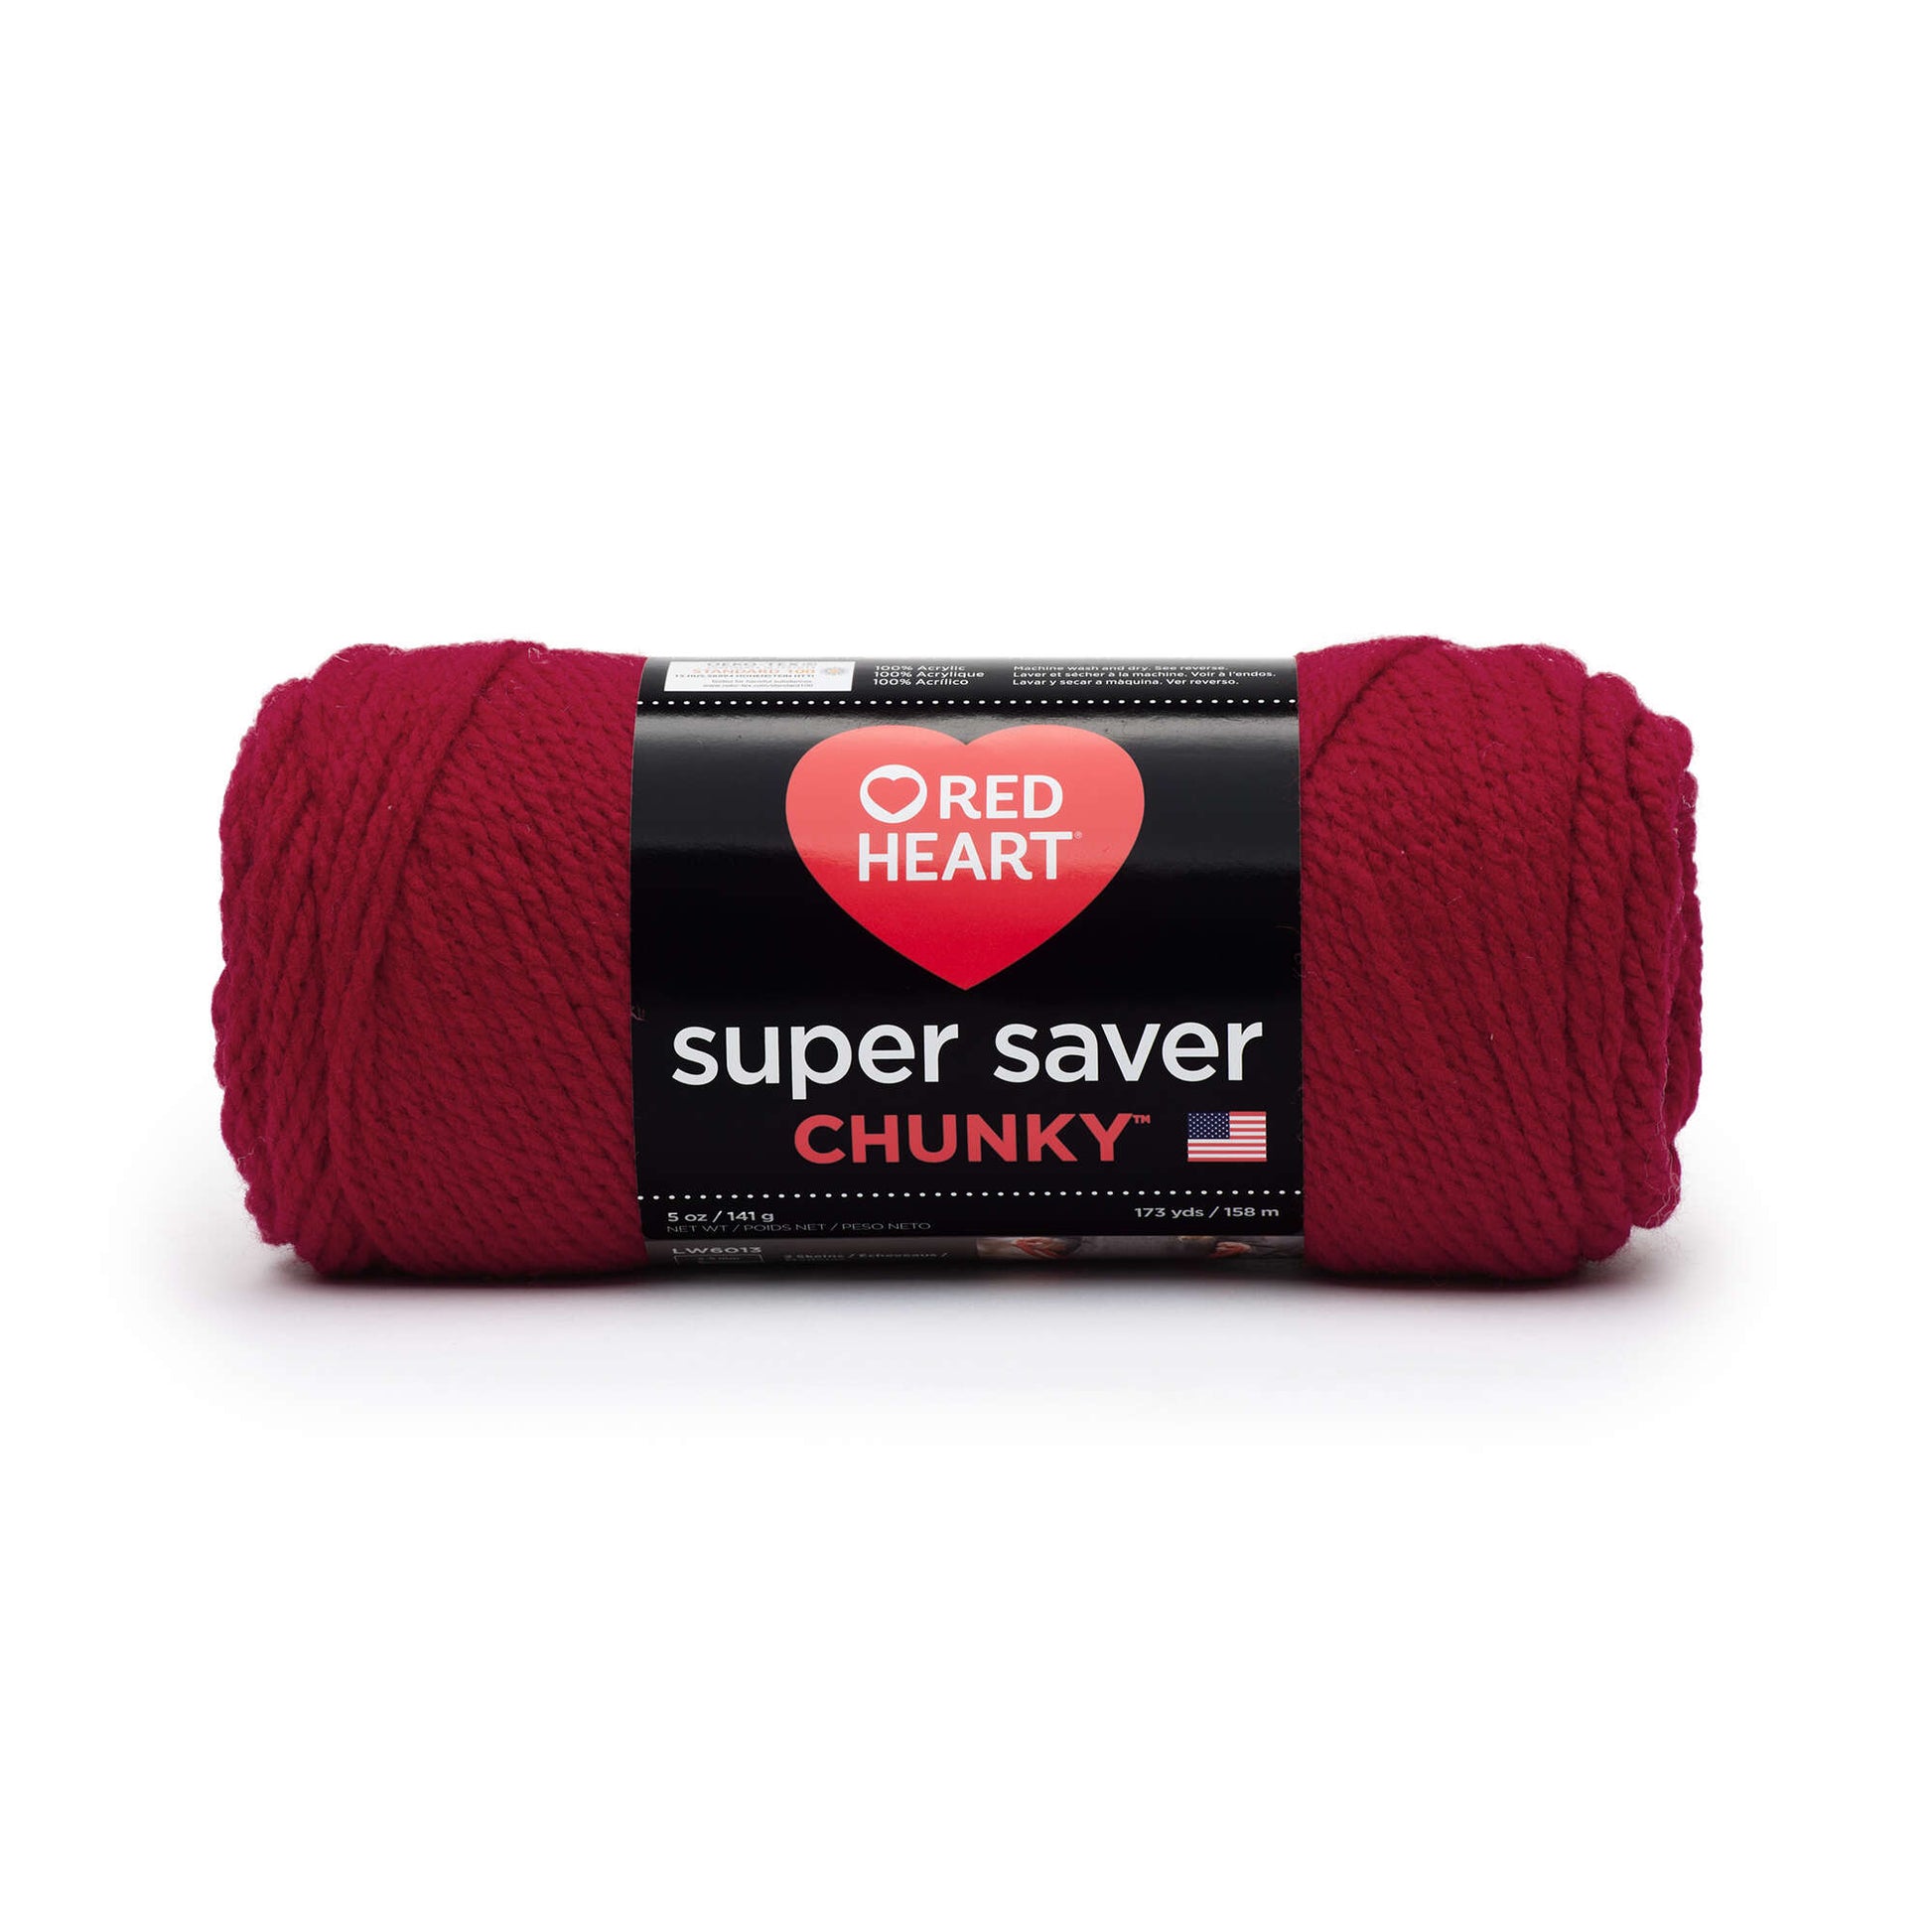 Red Heart Super Saver Chunky Yarn - Discontinued shades